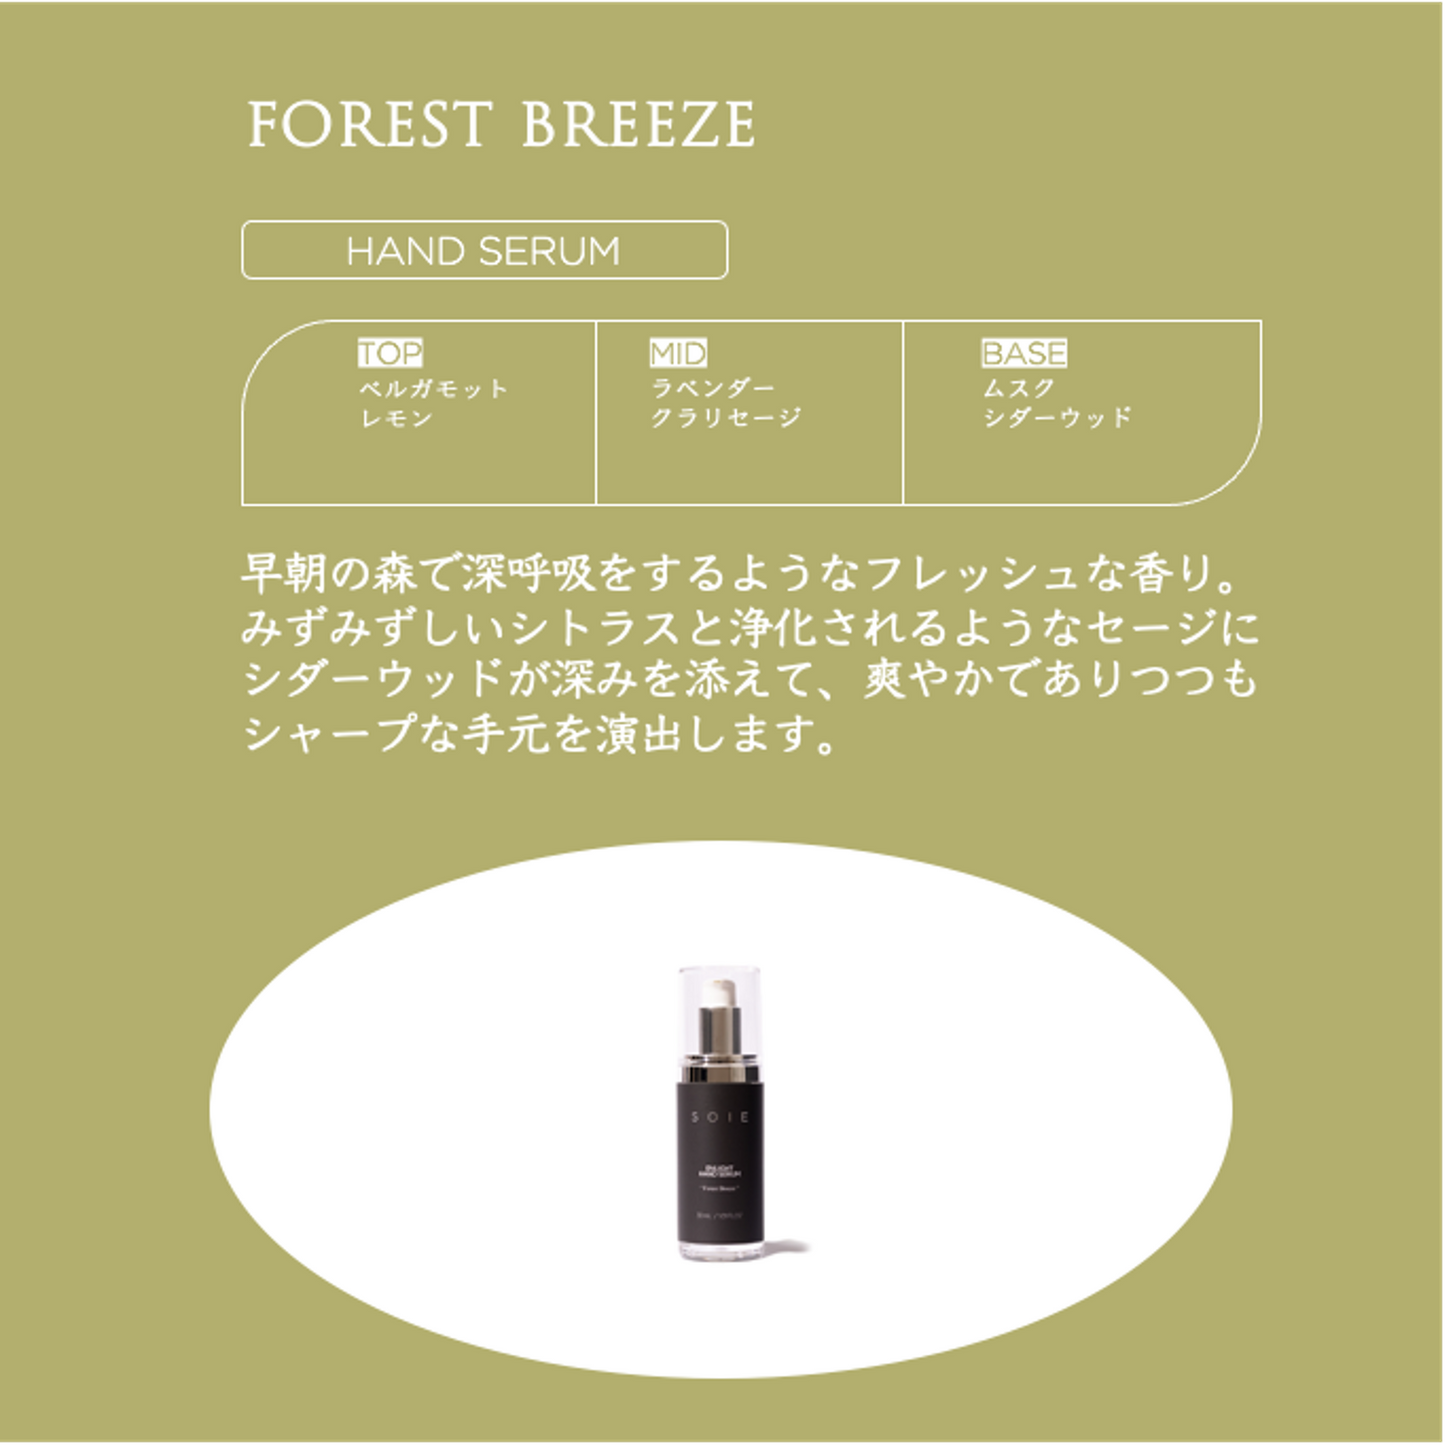 
                  
                    Enlight Hand Serum FB (hand serum) -Forest breeze-
                  
                